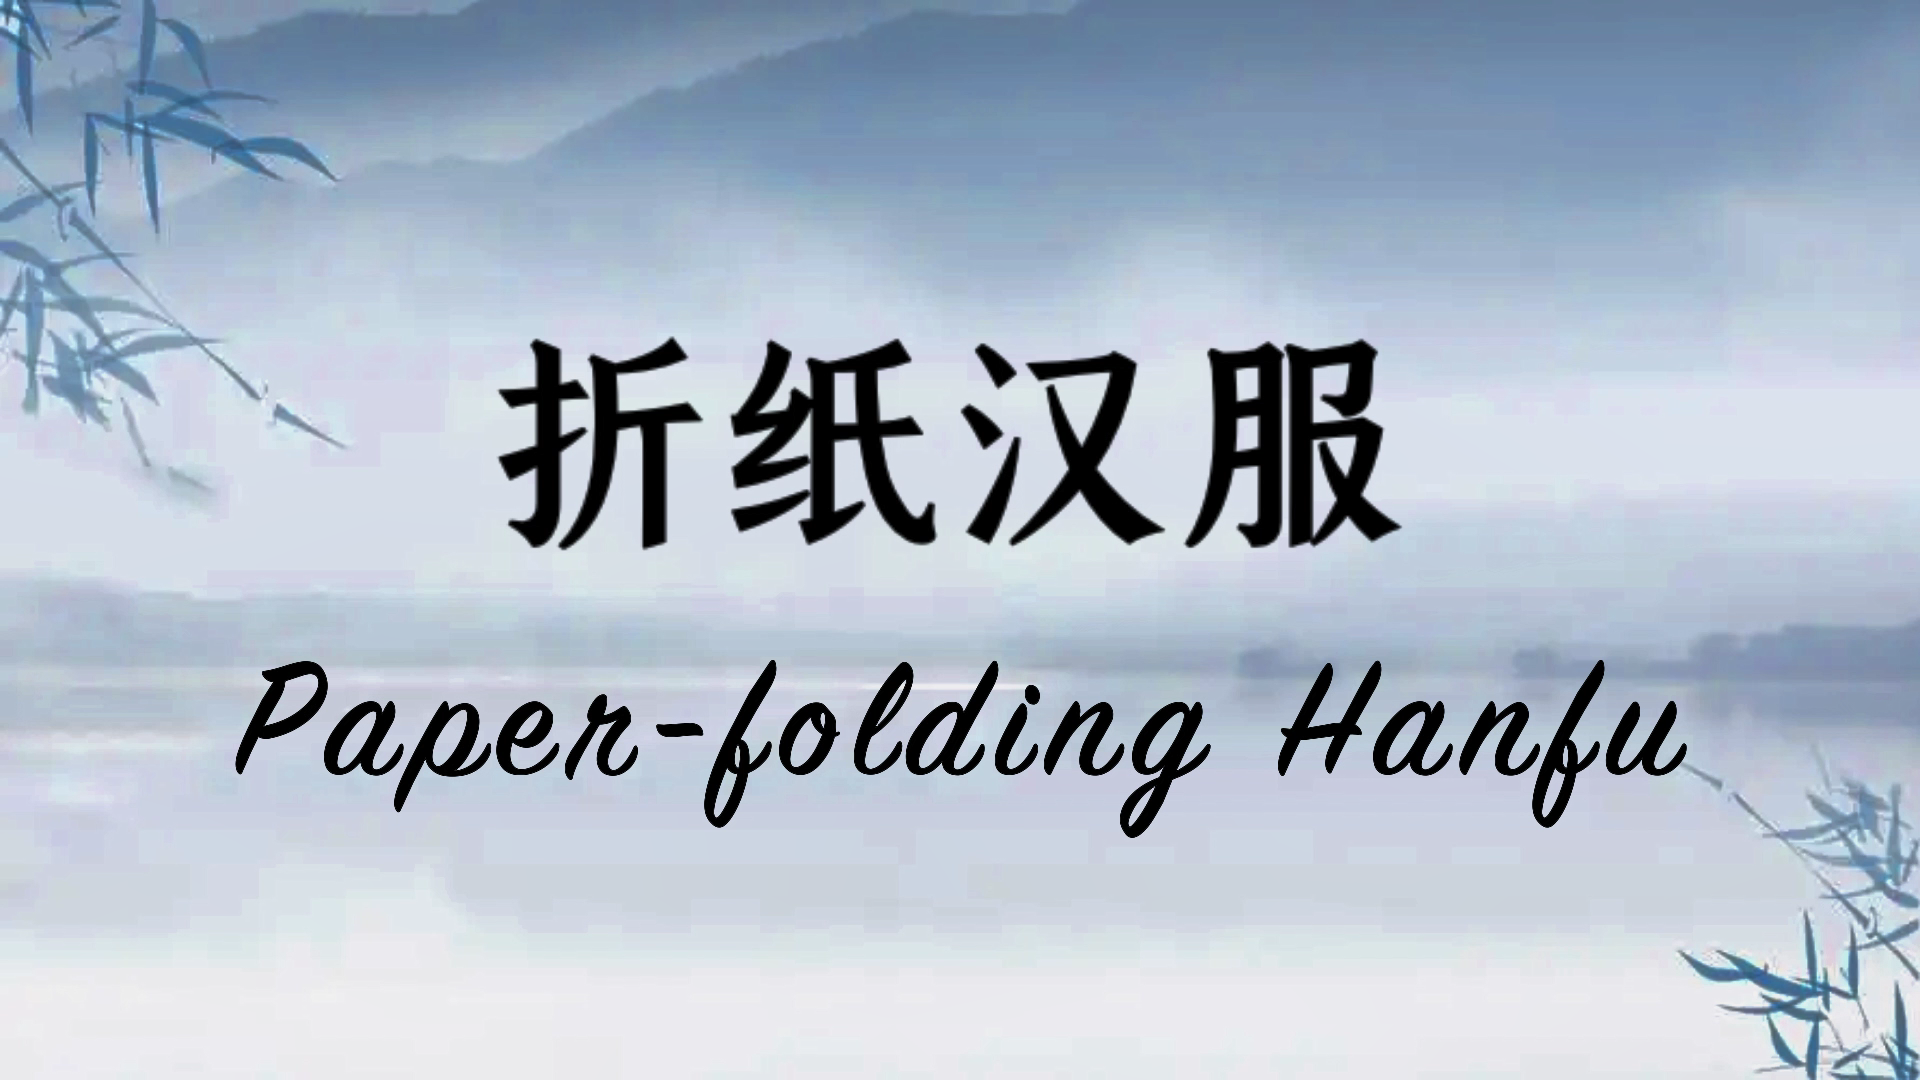 Lesson 9 Paper-folding: Hanfu